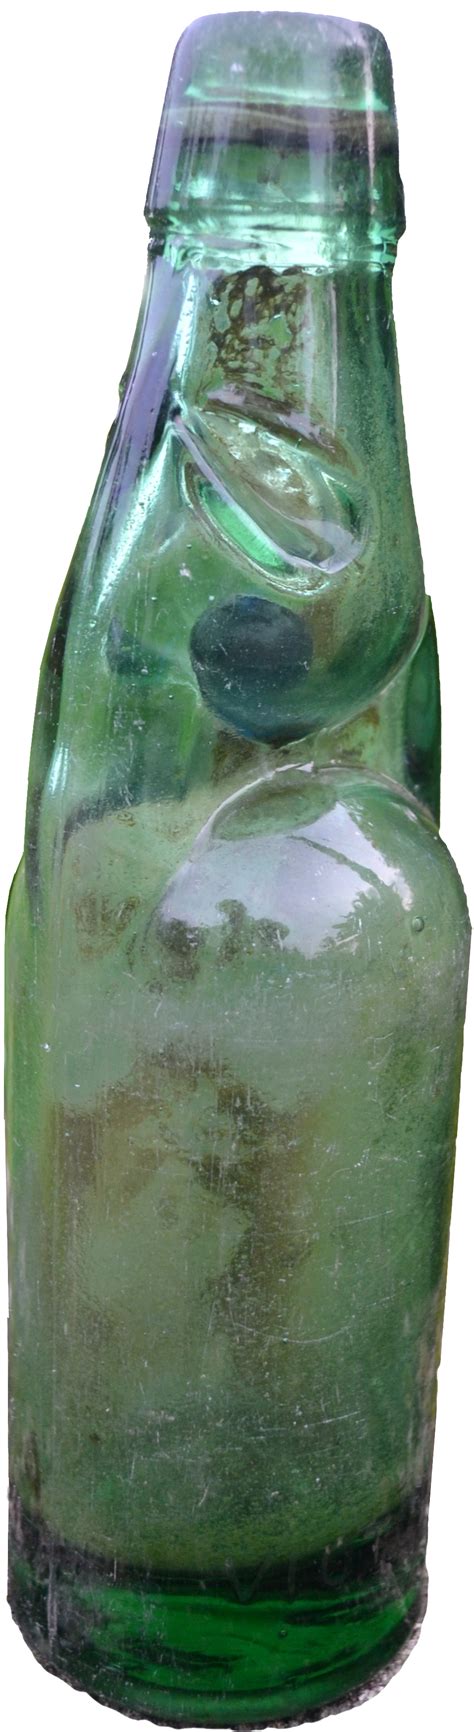 File:Codd-neck Soda Water Bottle from Kerala.png - Wikipedia